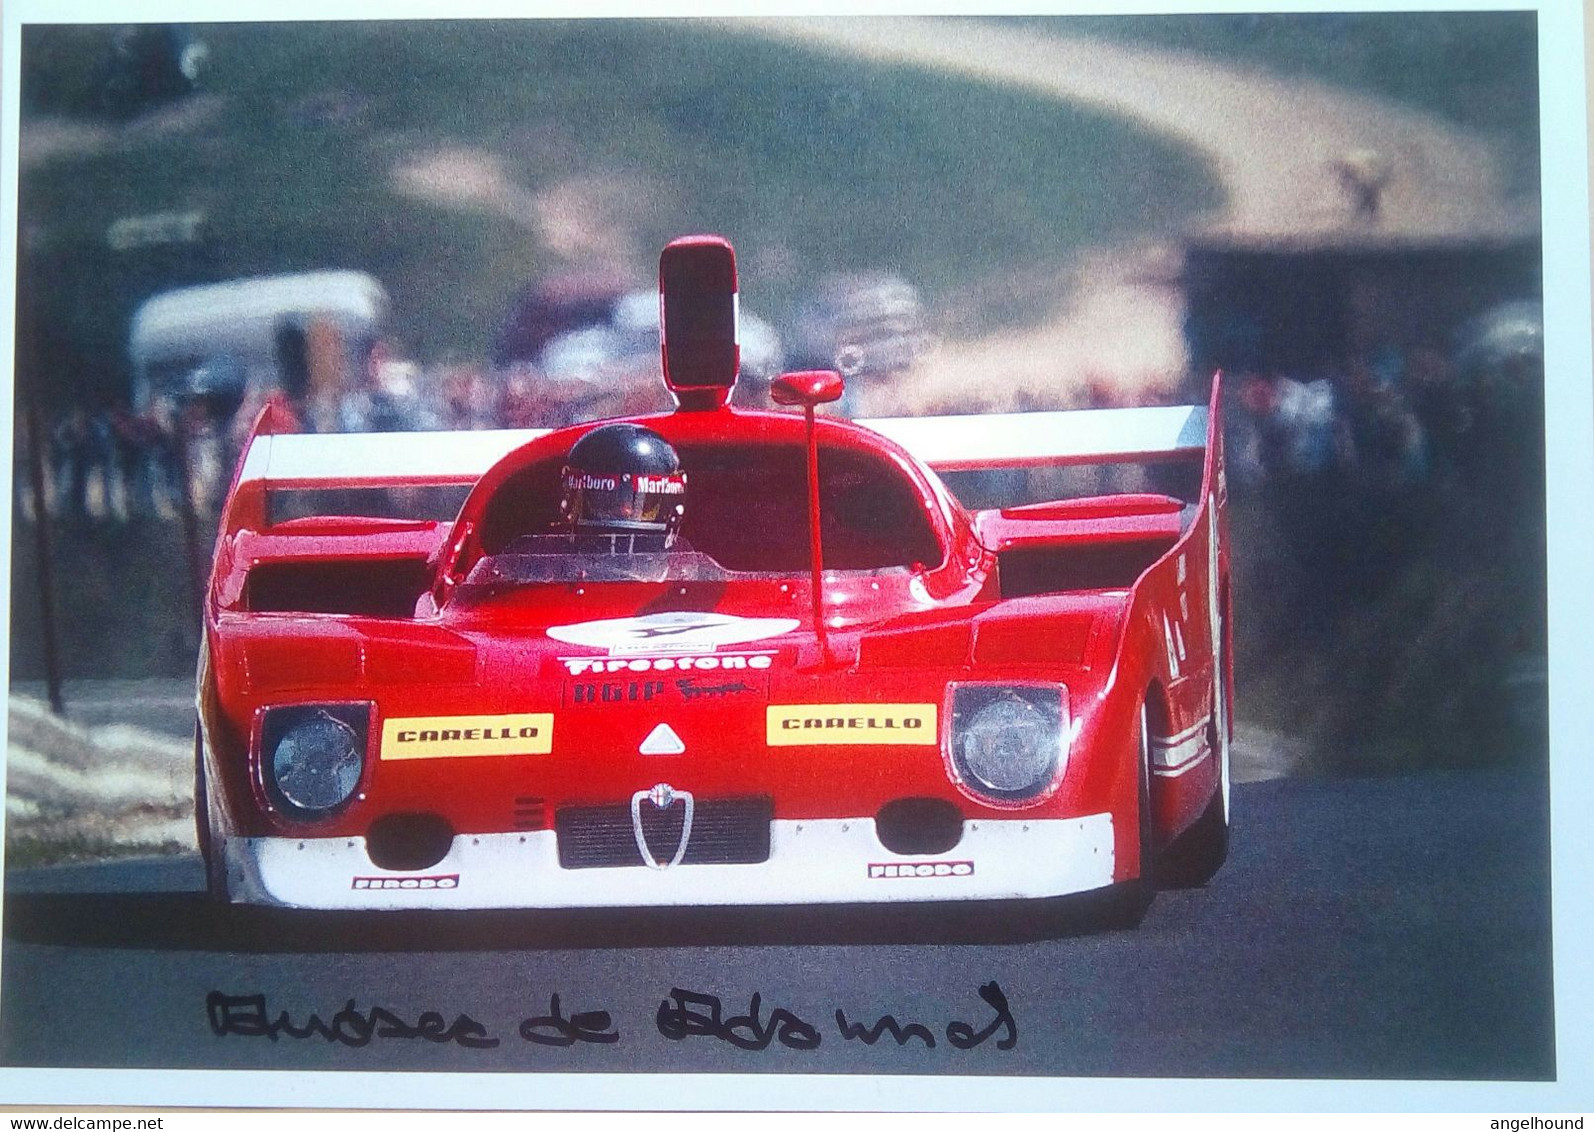 Andrea De Adamich ( Italian Race Car Driver) - Autogramme